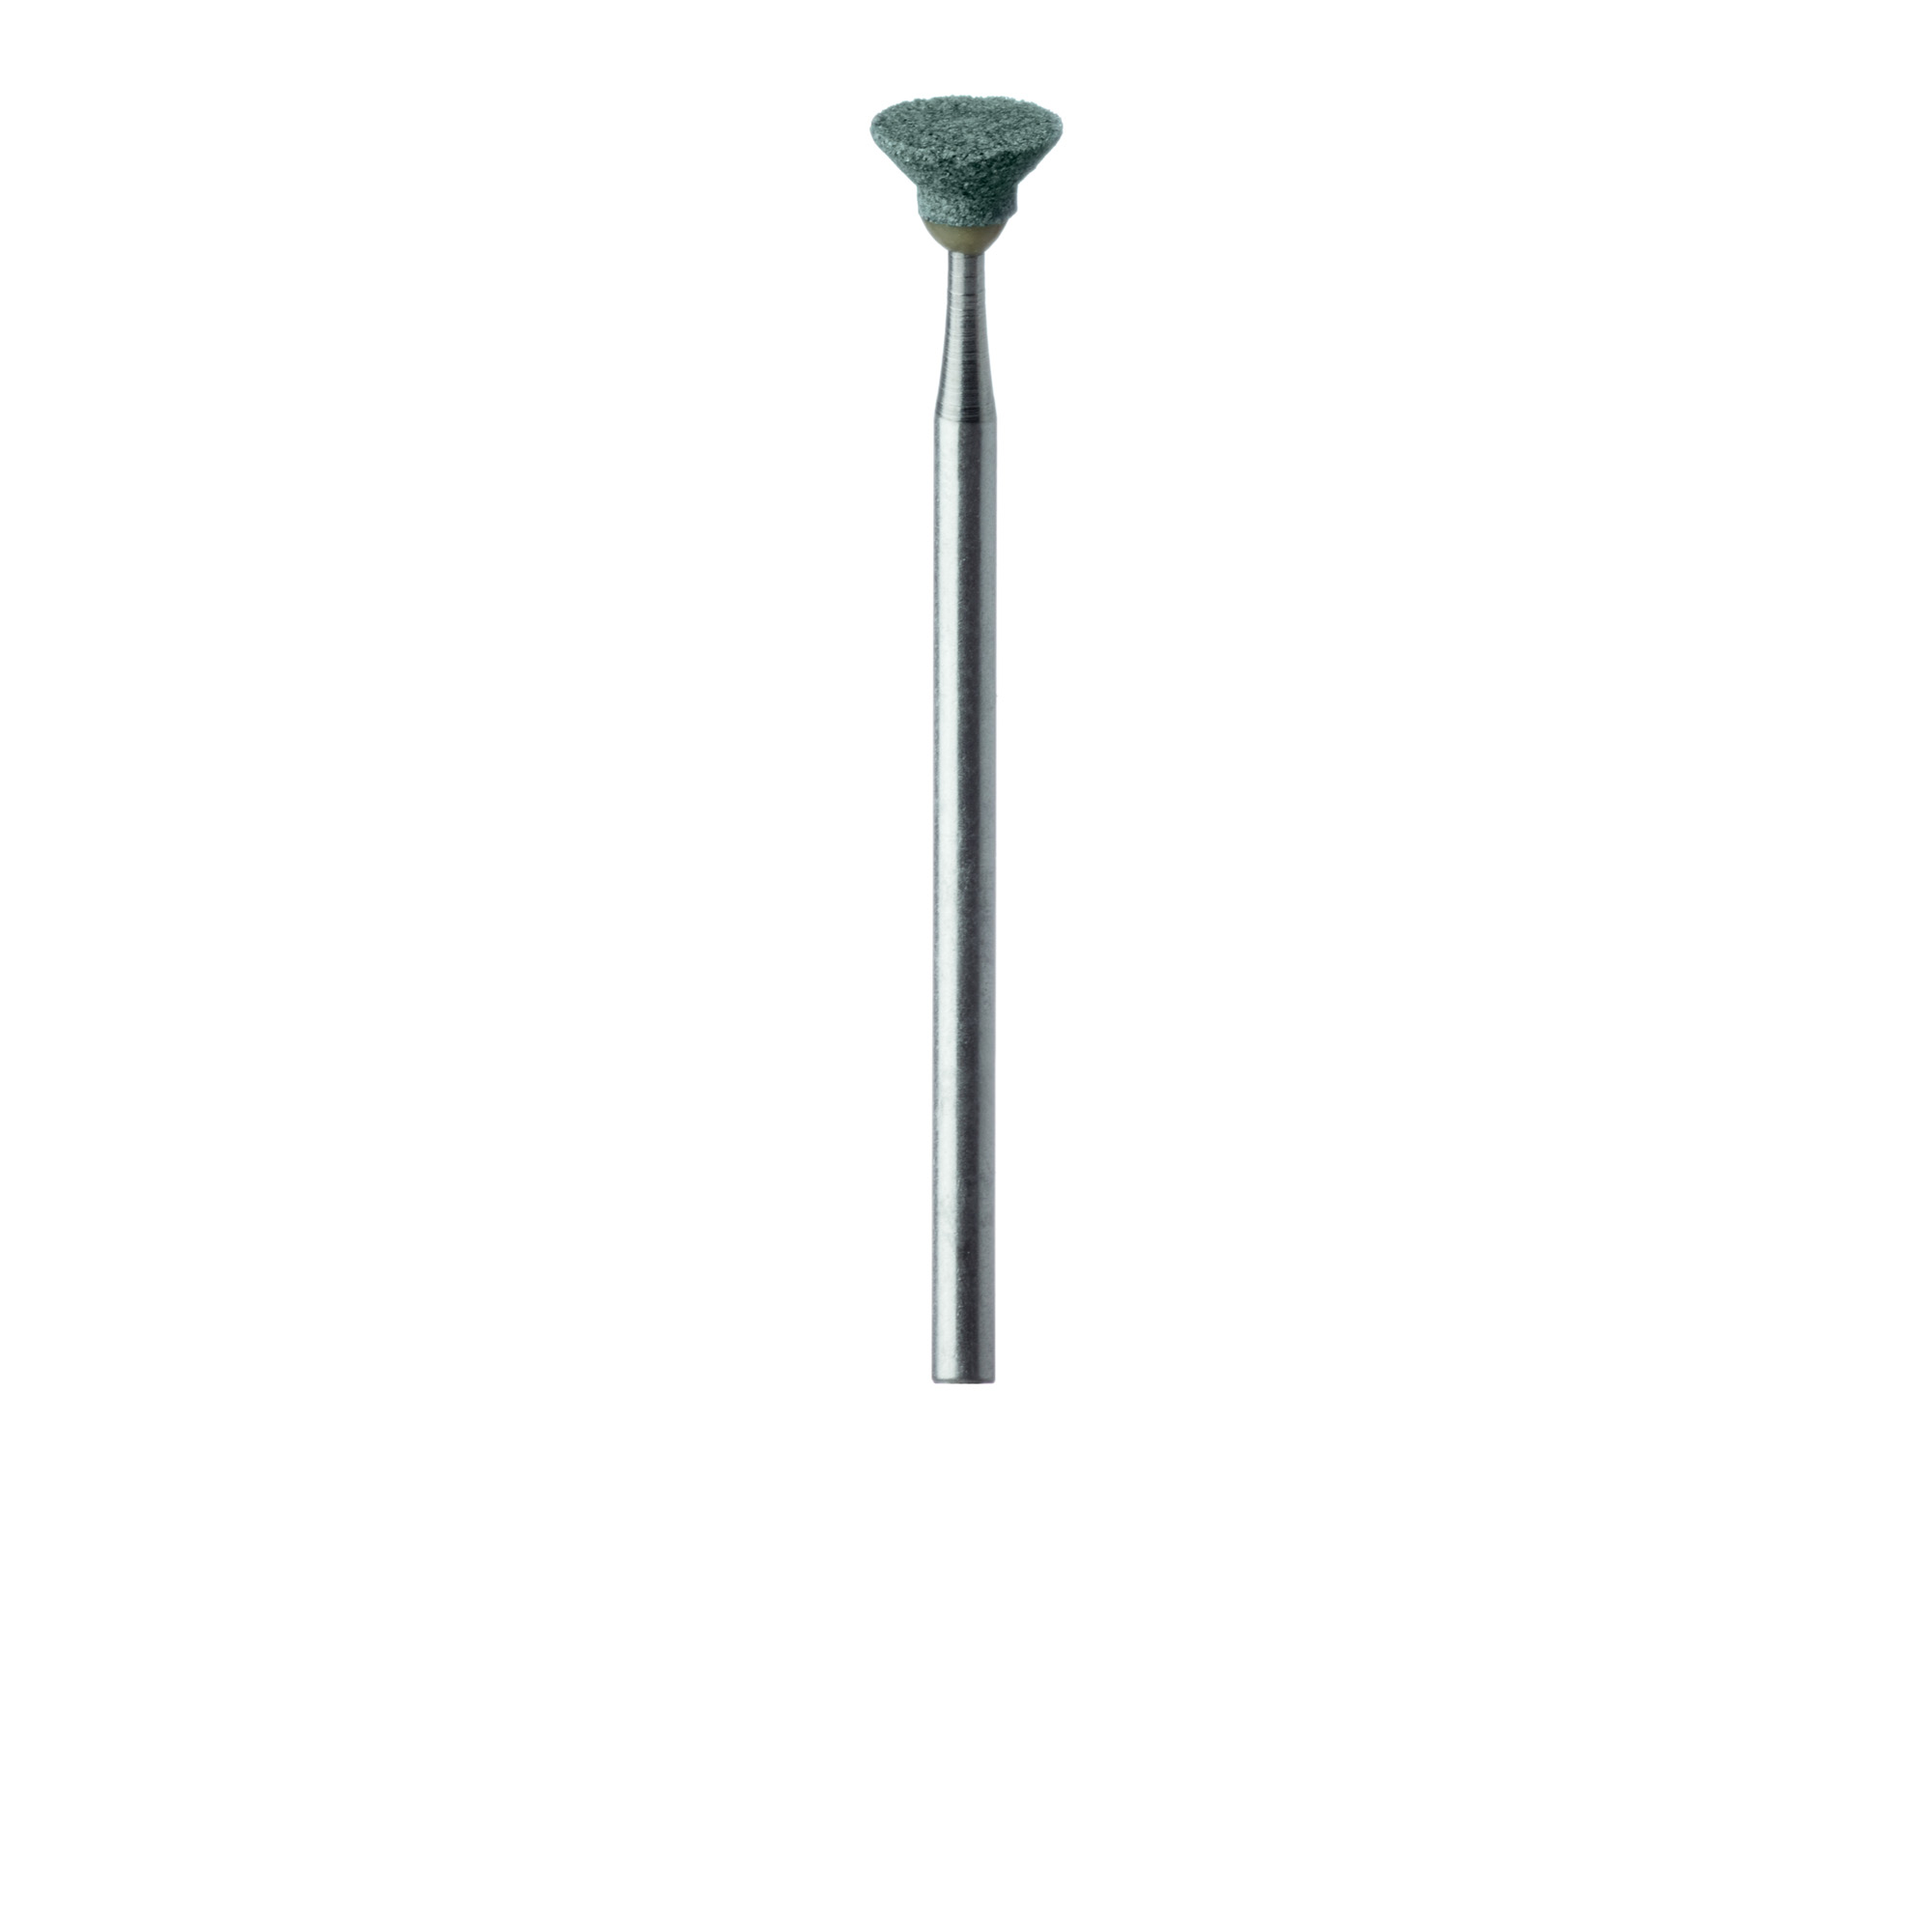 613-070-HP-GRN Abrasive, Green, Inverted Cone, 7mm Ø, Medium, HP